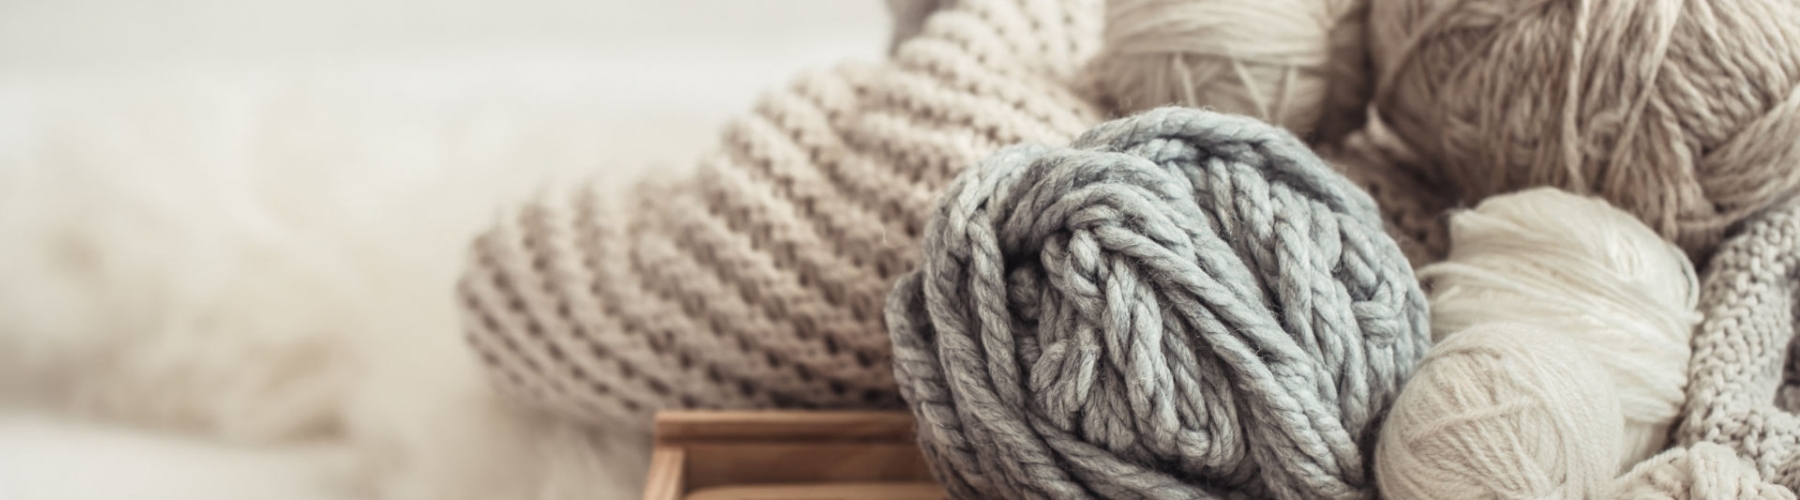 manualidades-crochet-ganchillo